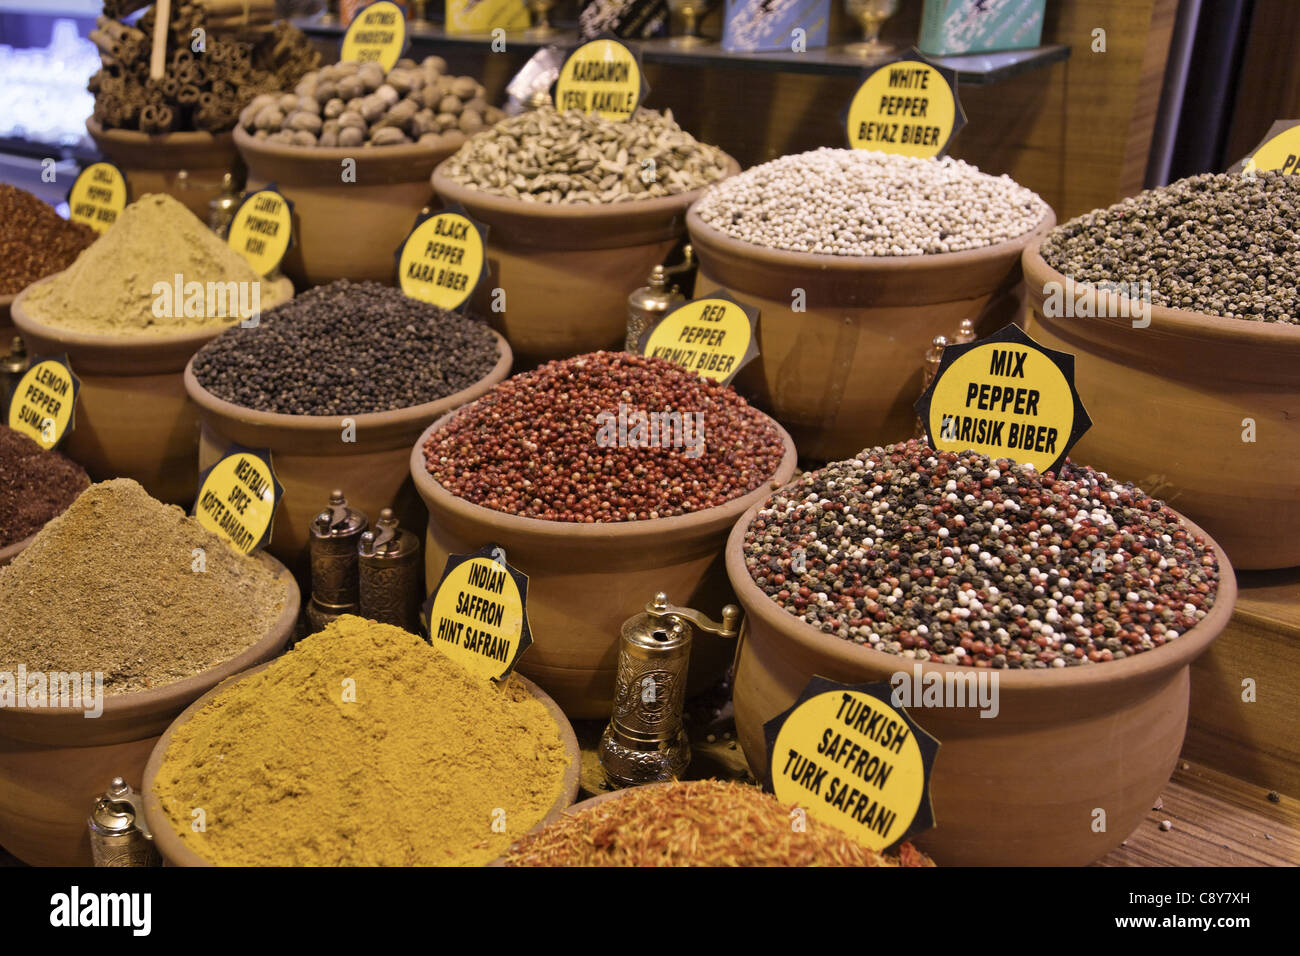 Misir Carsisi, spice bazaar, interieur, Istanbul, Turkey , Europe, Stock Photo